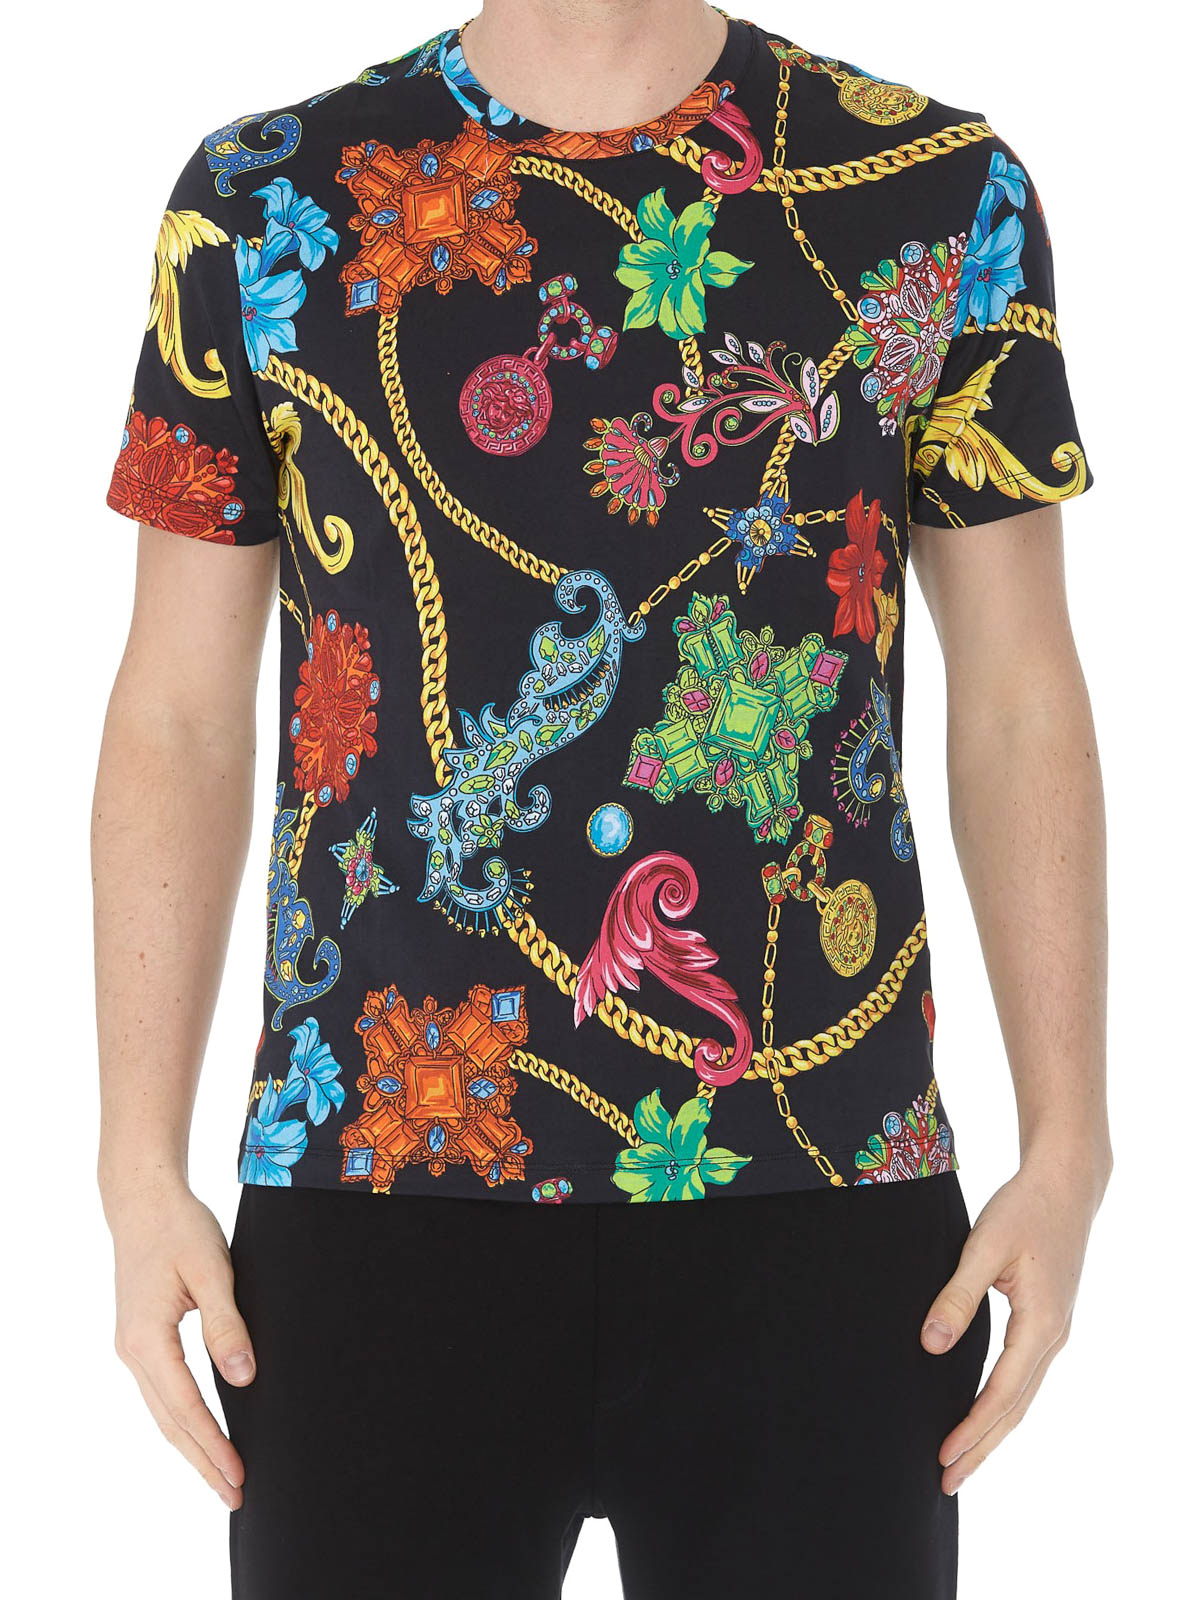 versace floral t shirt